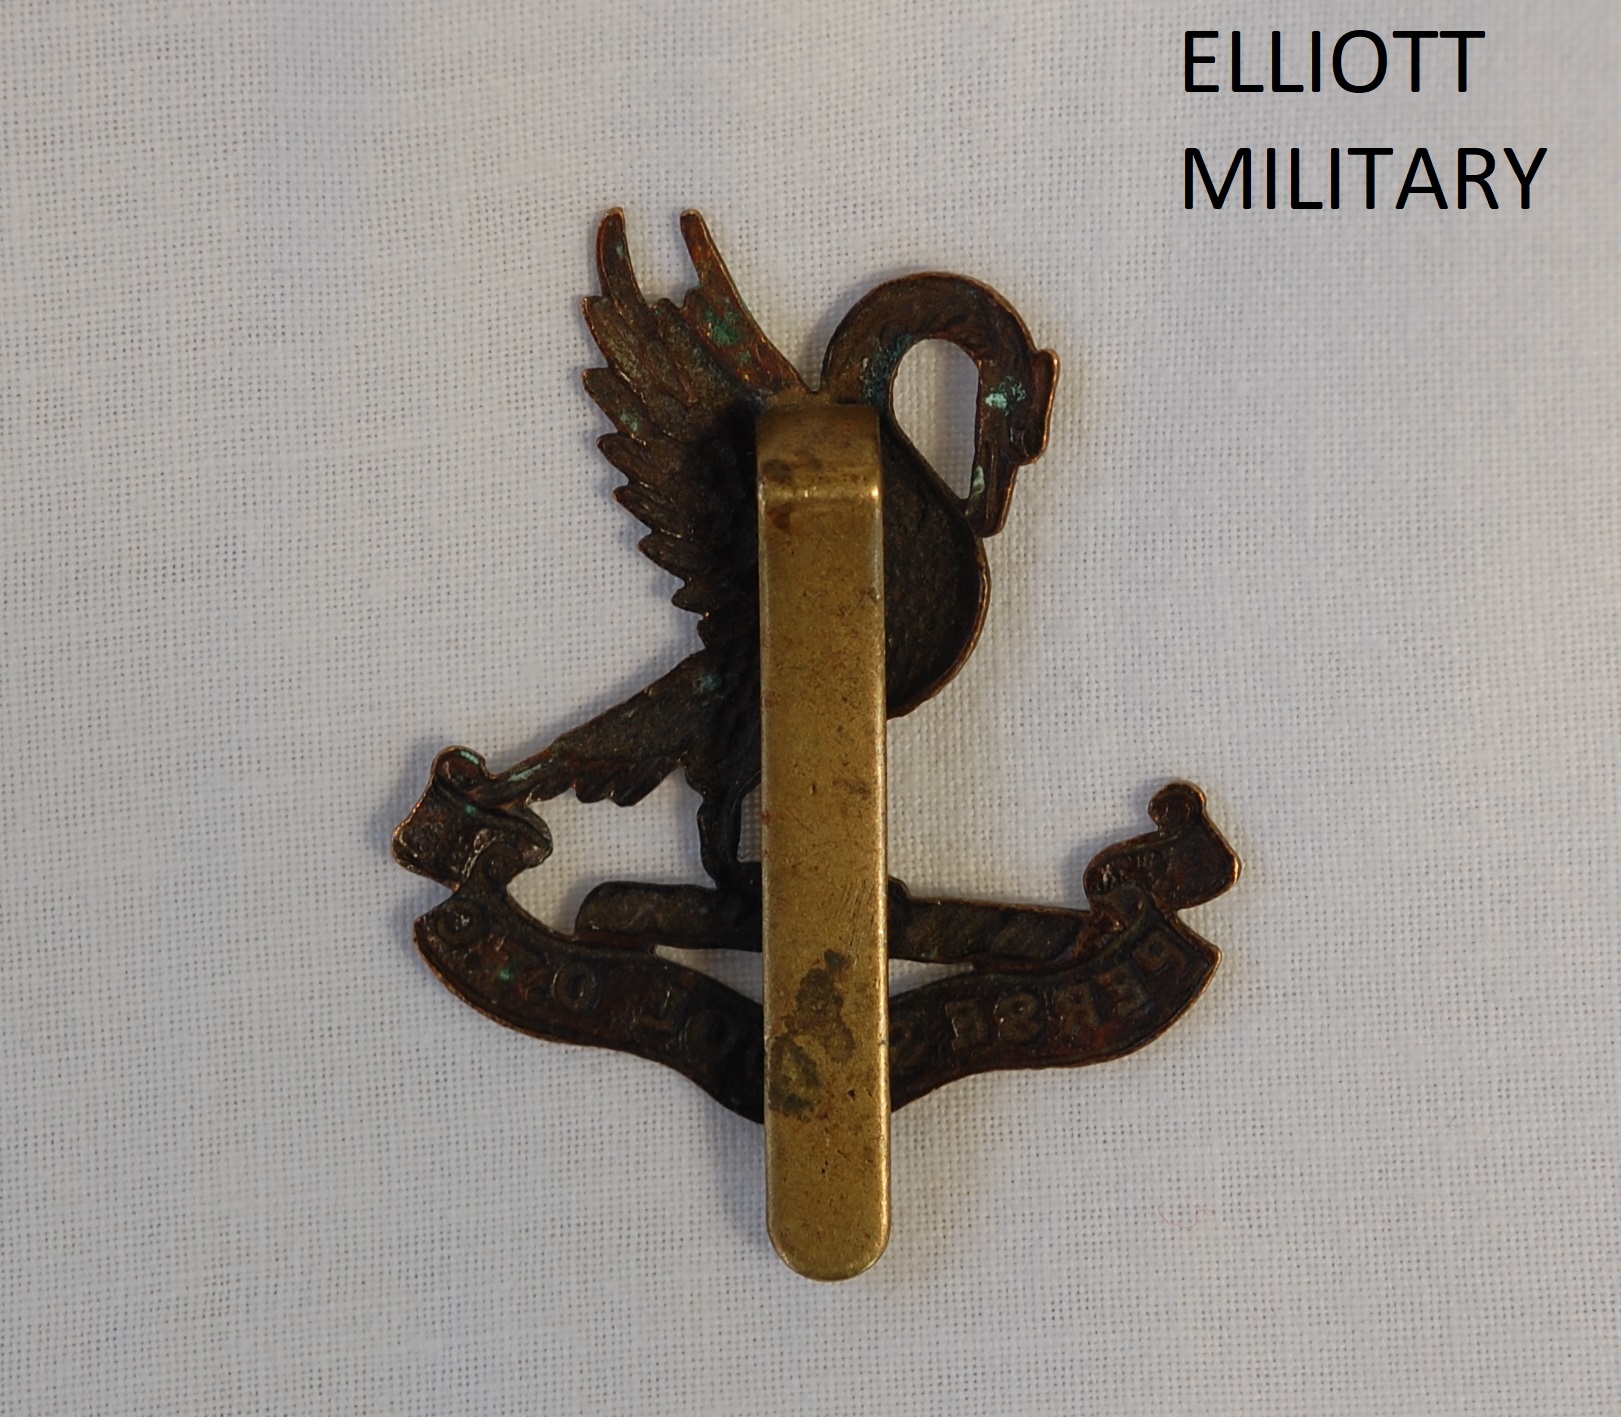 Perse School Officer Training Corps Brass Badge - Elliott Military